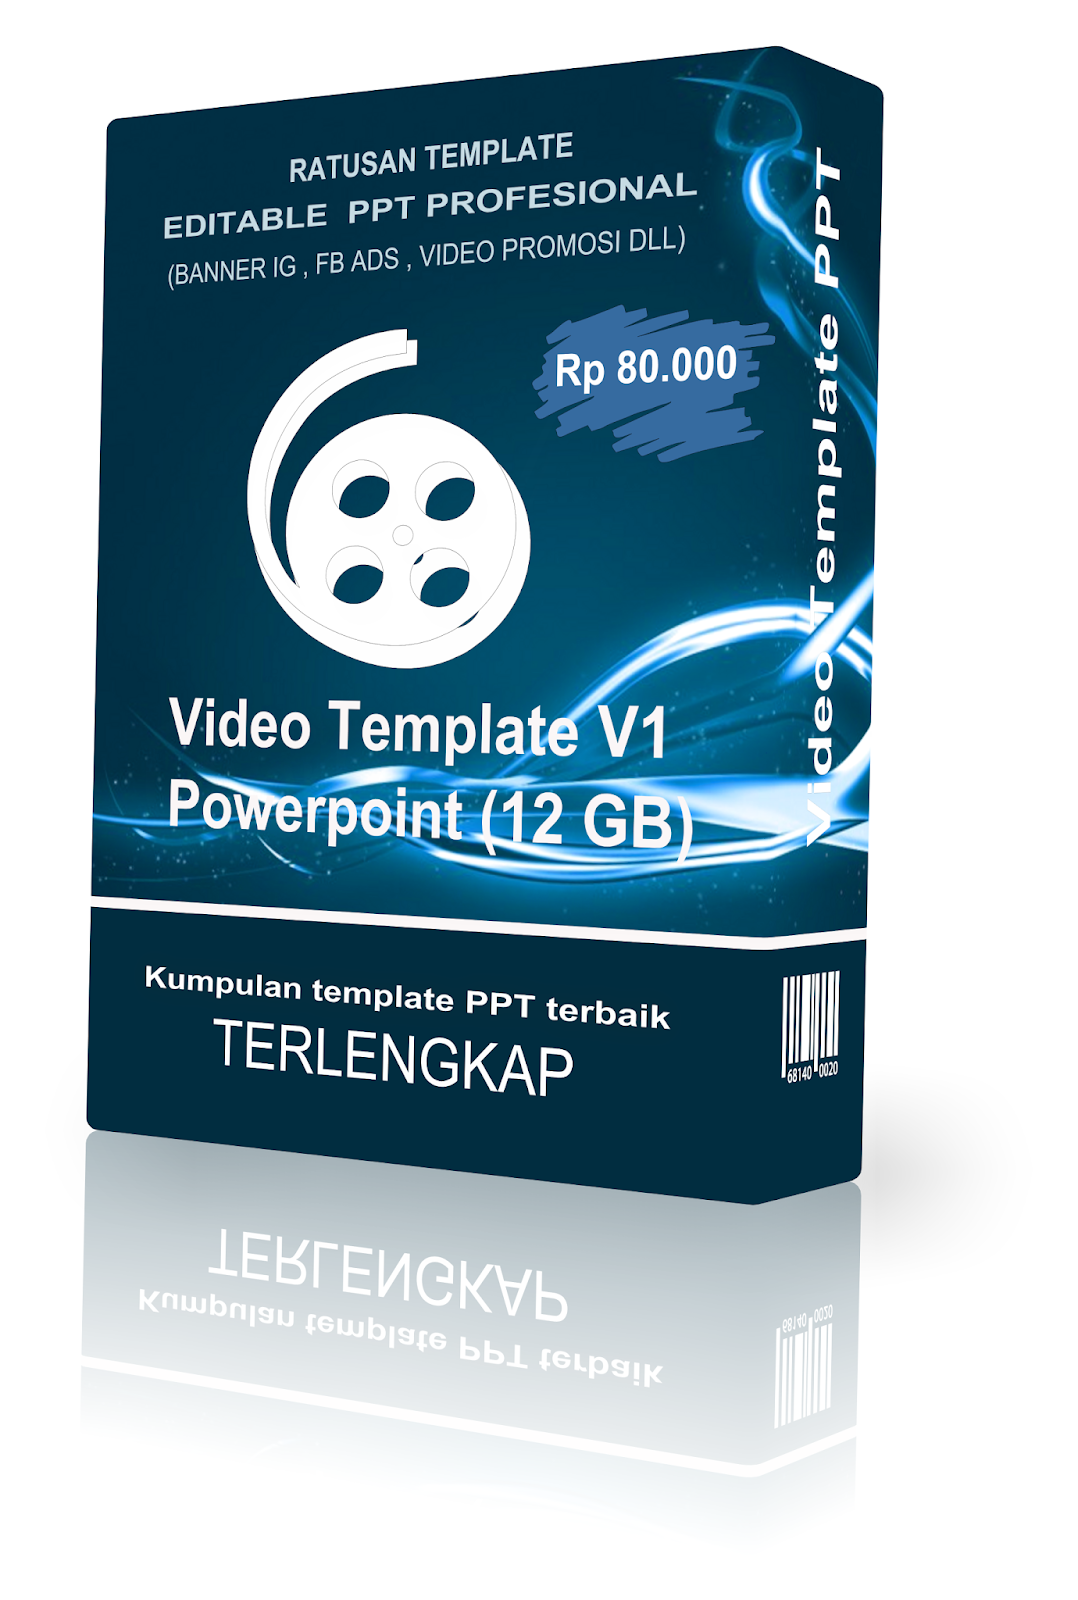 download-template-ppt-video-template-murah-video-marketing-video-promosi